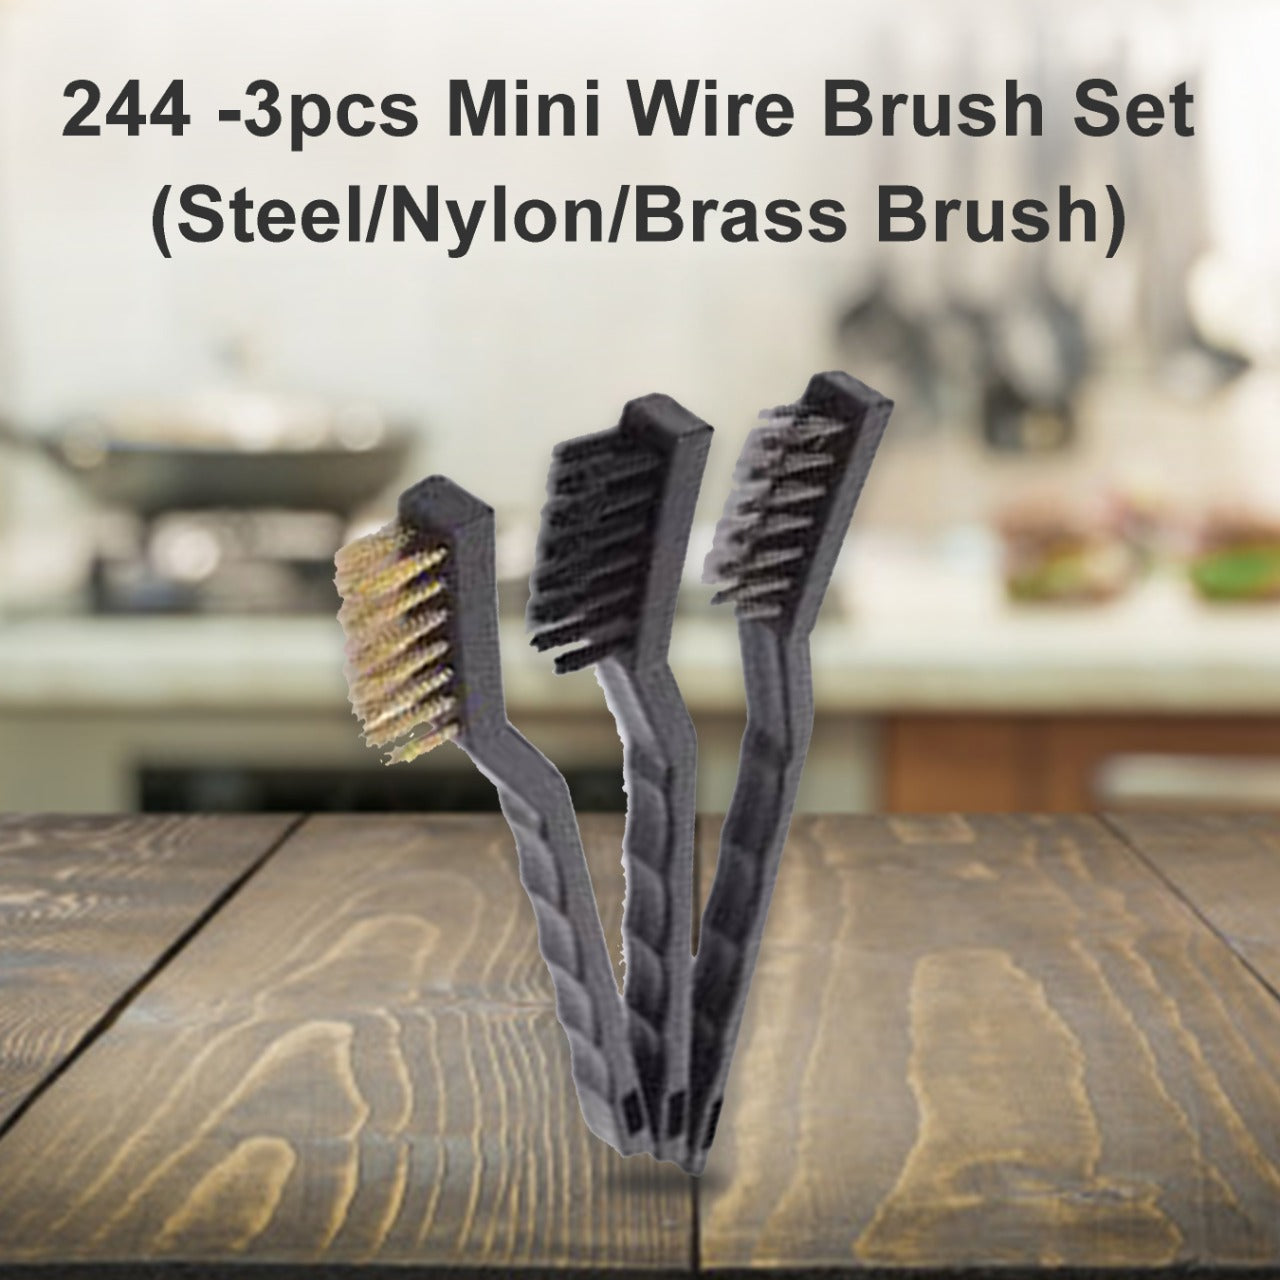 -3pcs Mini Wire Brush Set (Steel/Nylon/Brass Brush)